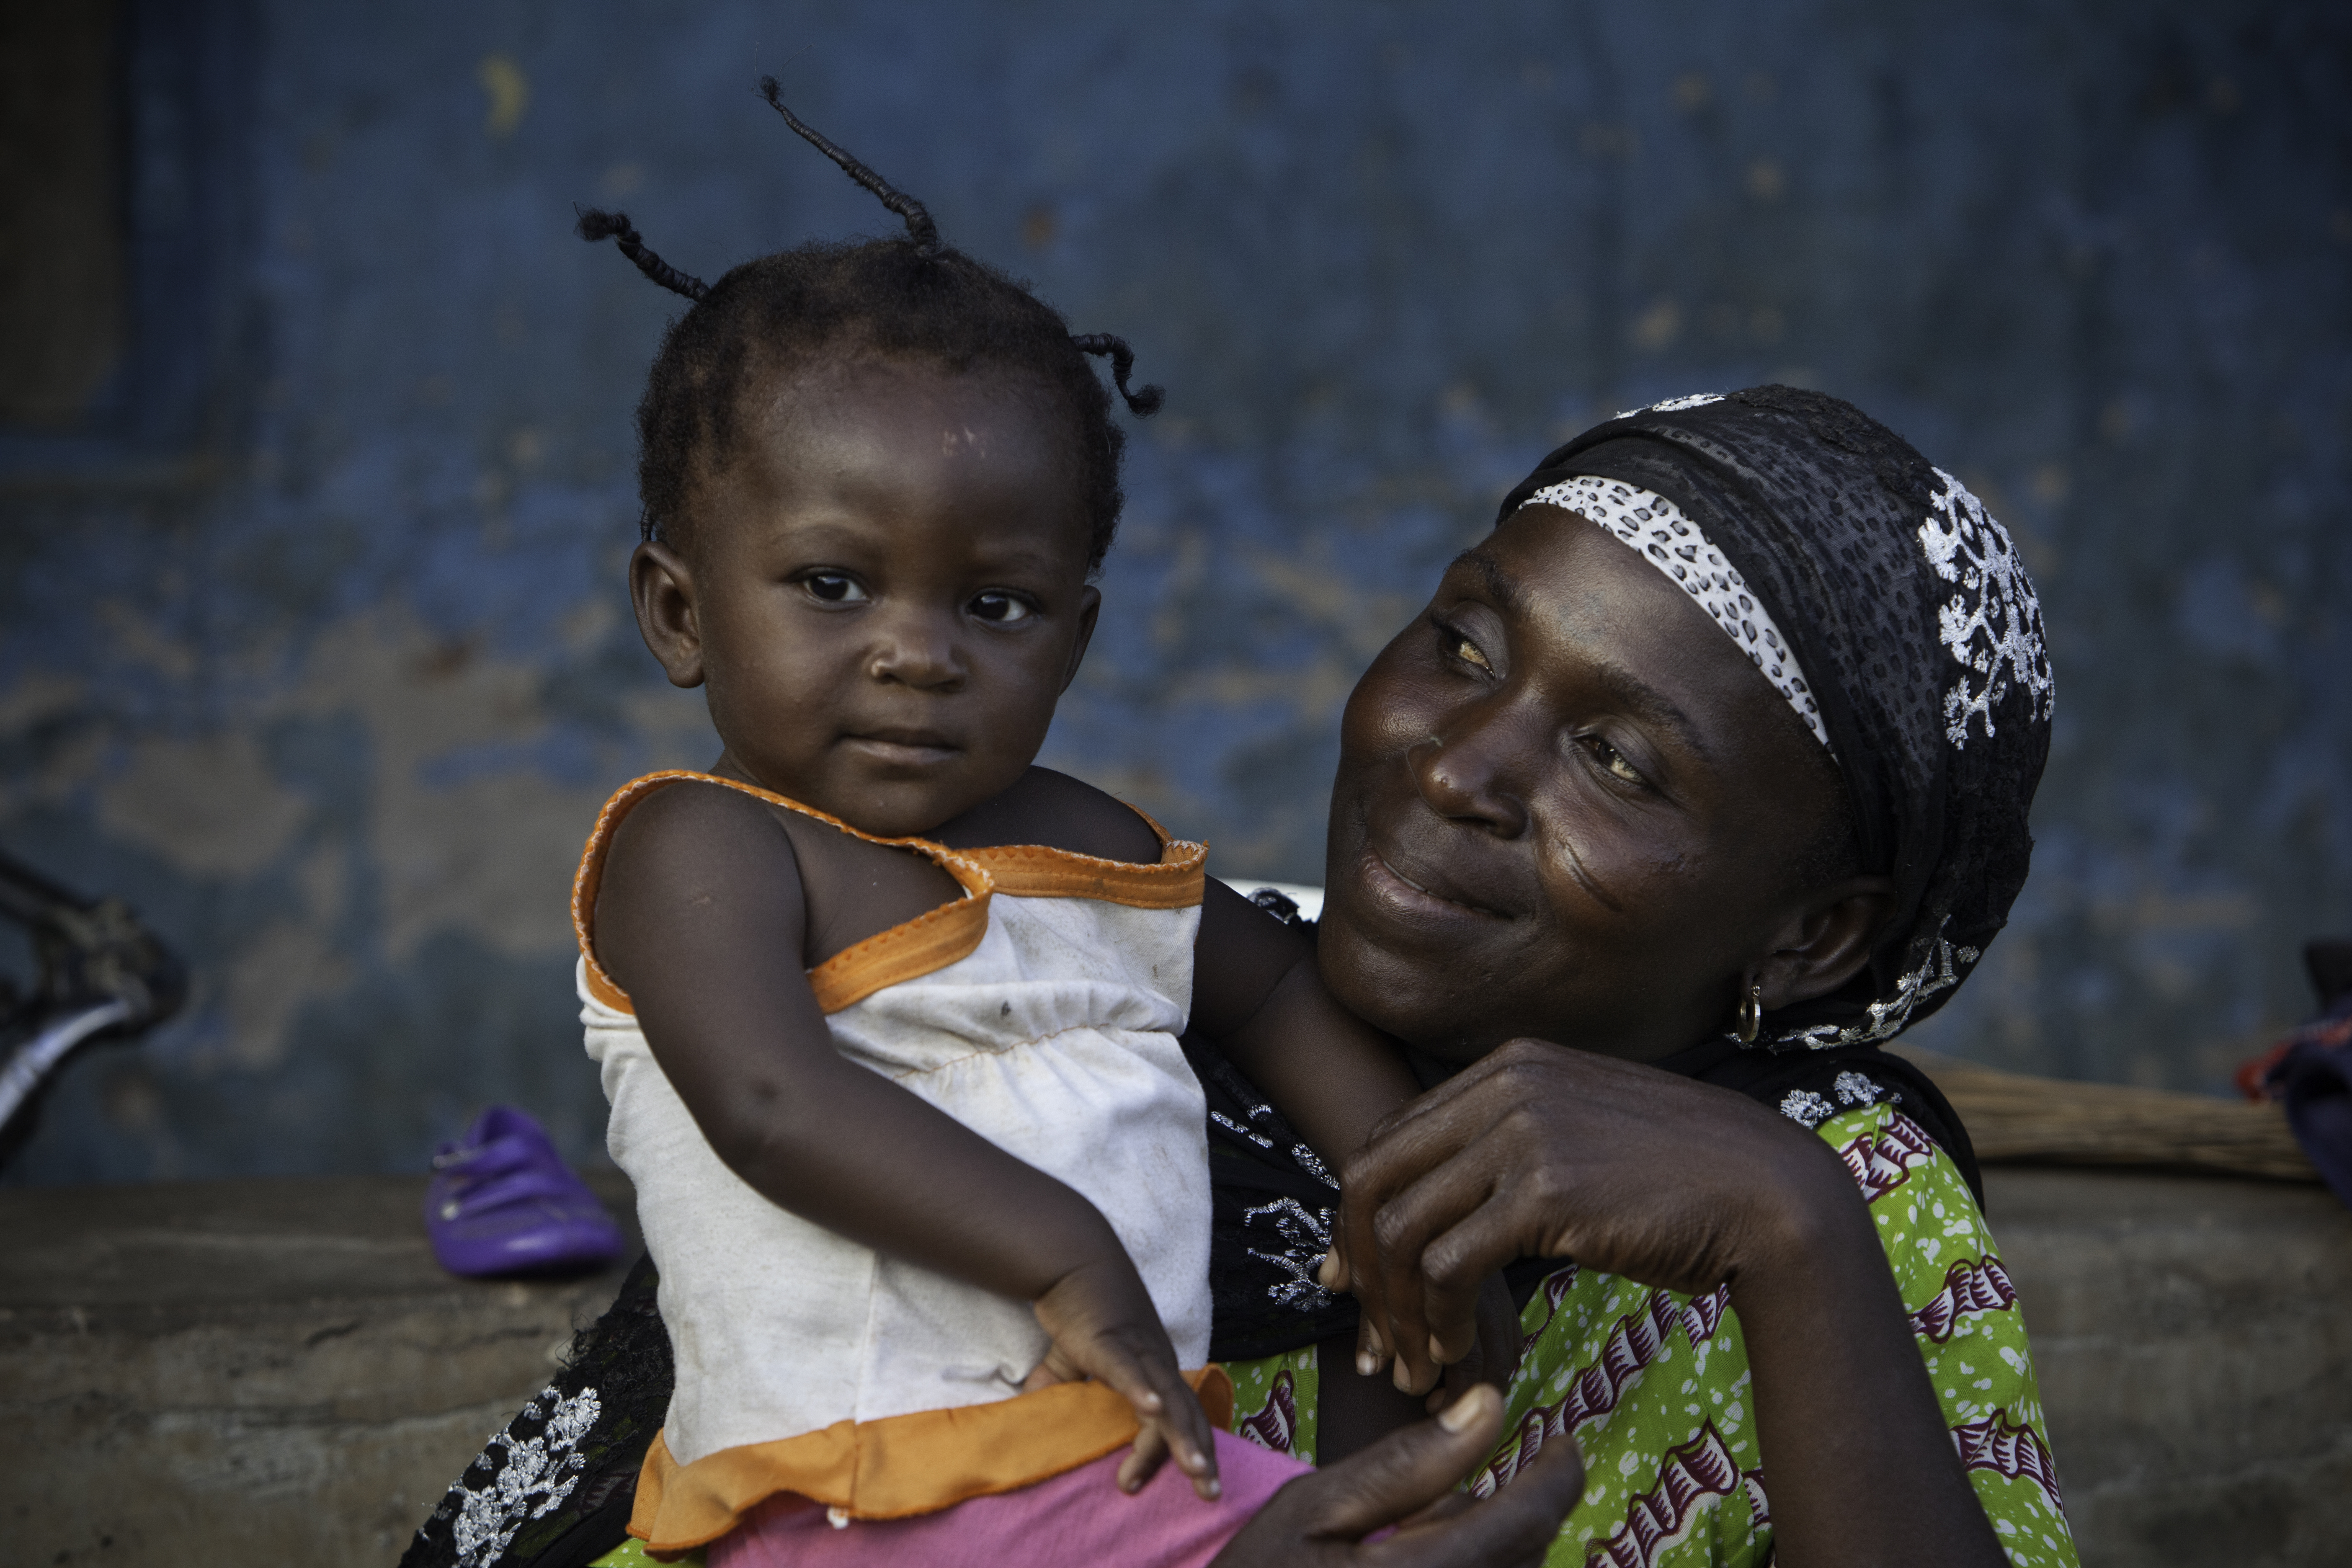 A mother holds her child in Kurawarakura, Ghana. PATH/Evelyn Hockstein